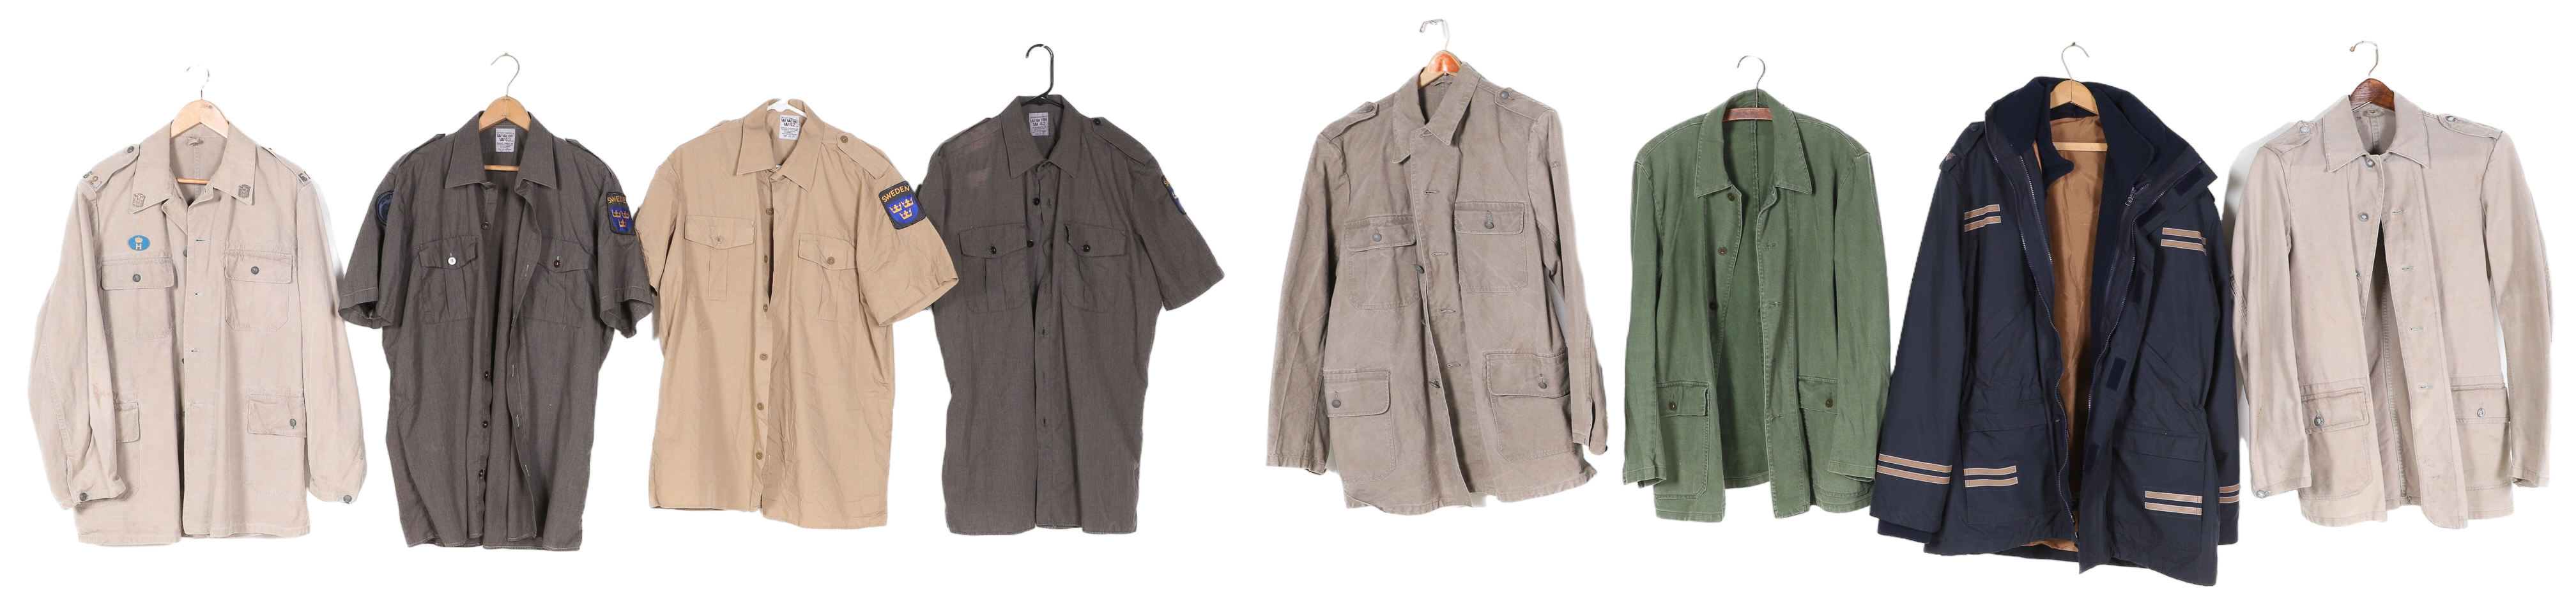 Swedish military shirts and jackets 2e1f96